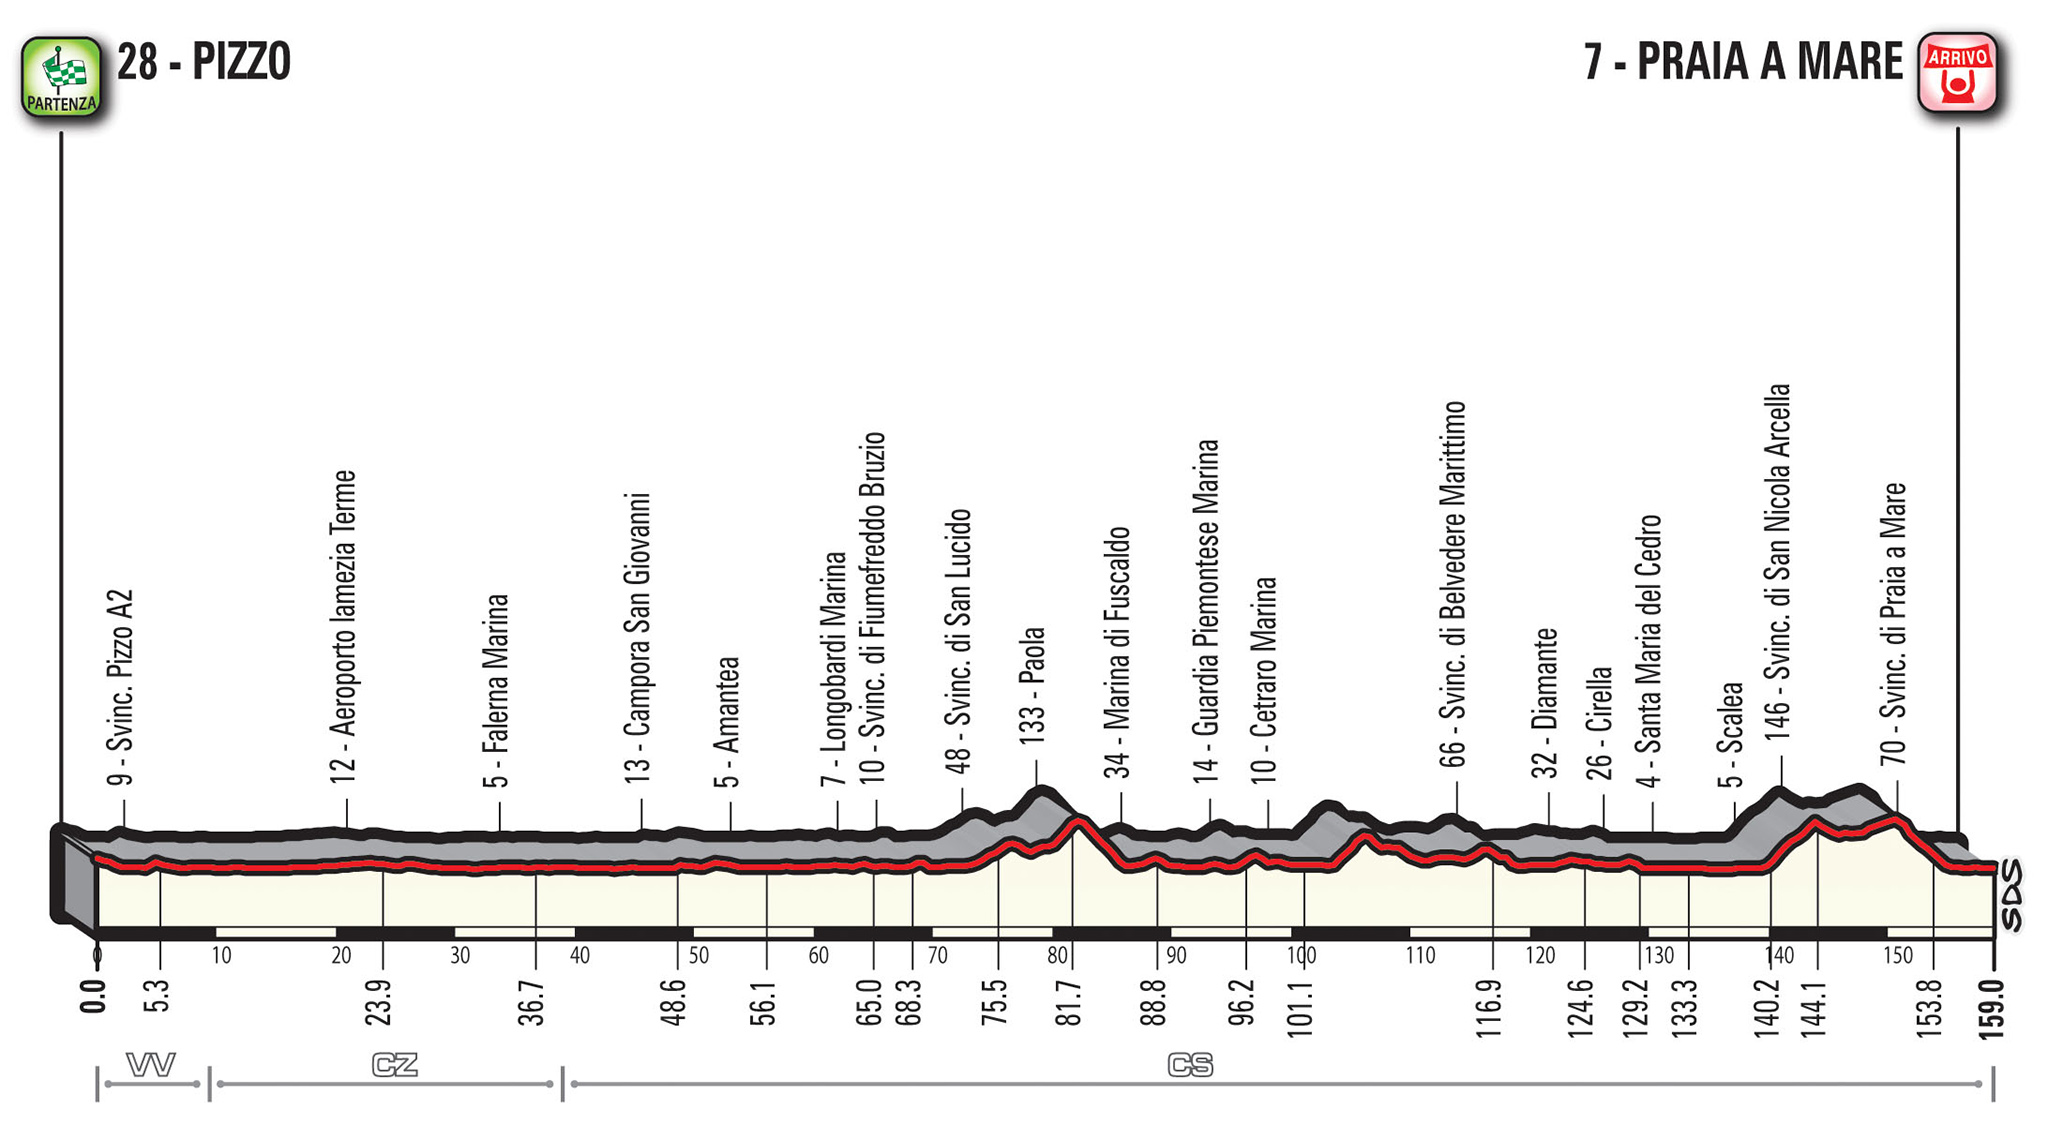 Giro d'Italia Lamezia Pizzo